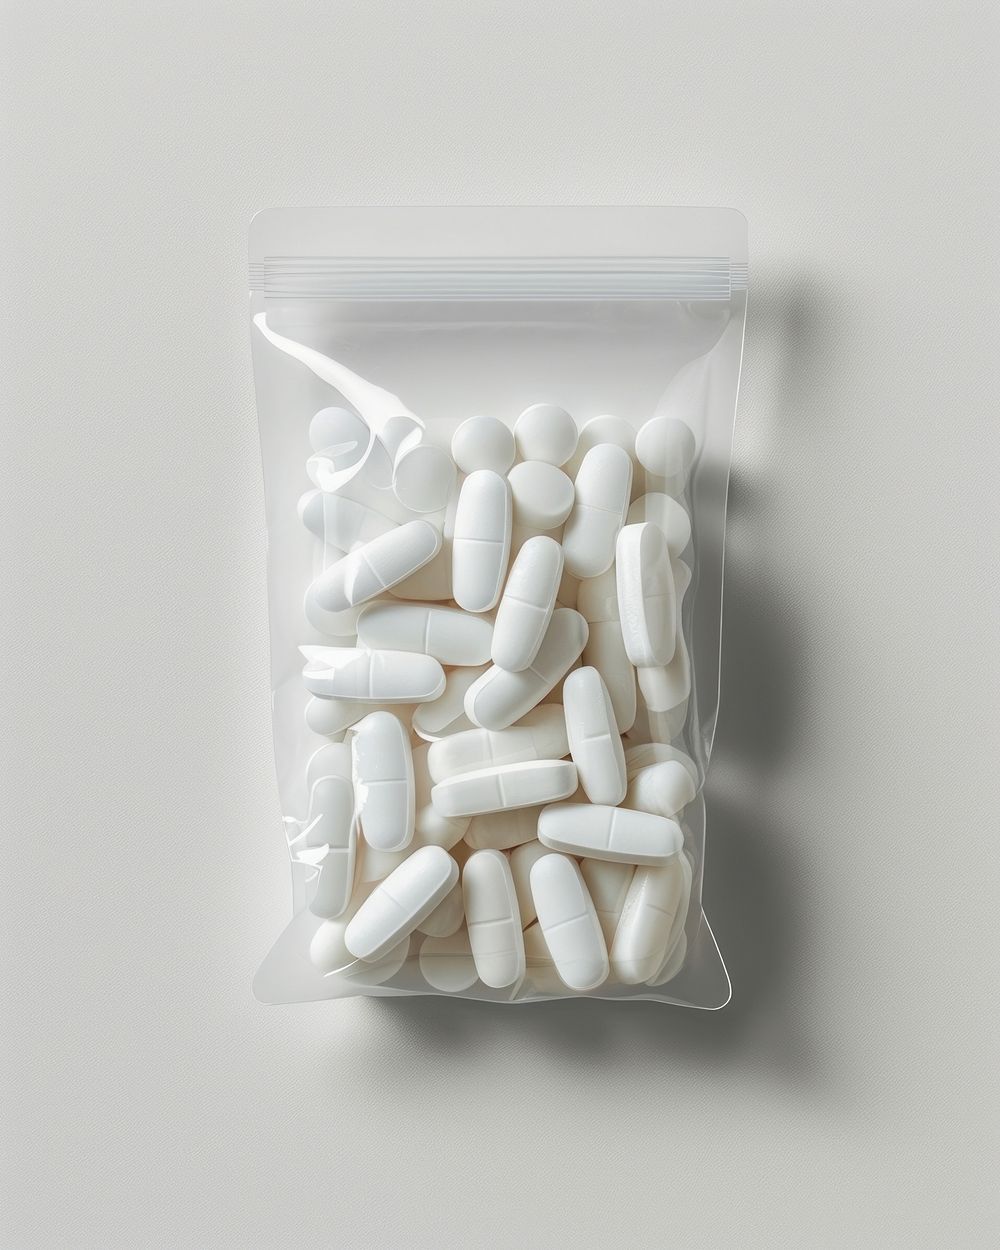 Pill white antioxidant medication.